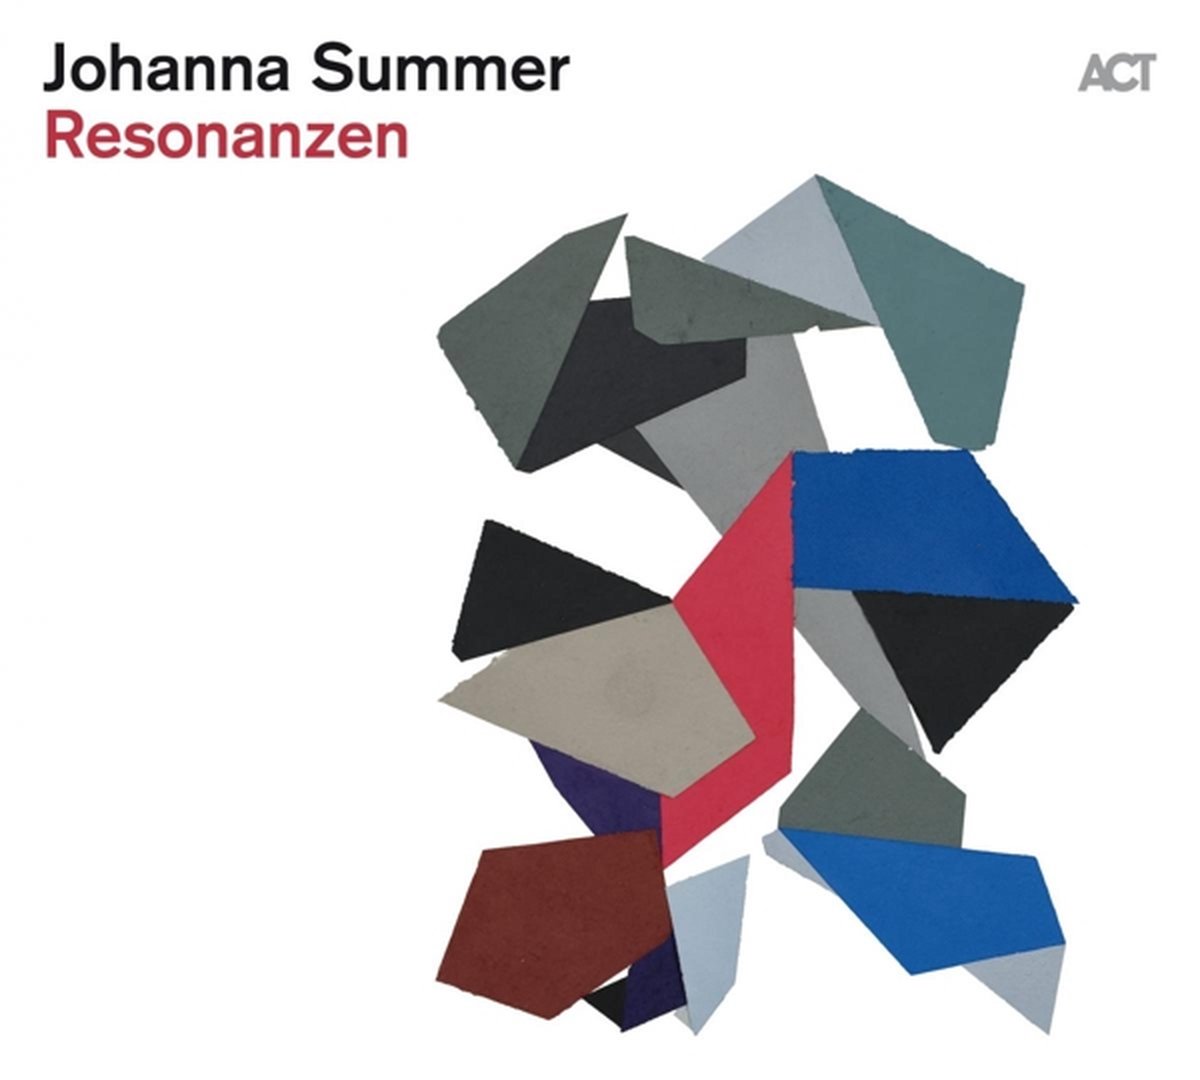 Resonanzen | Johanna Summer